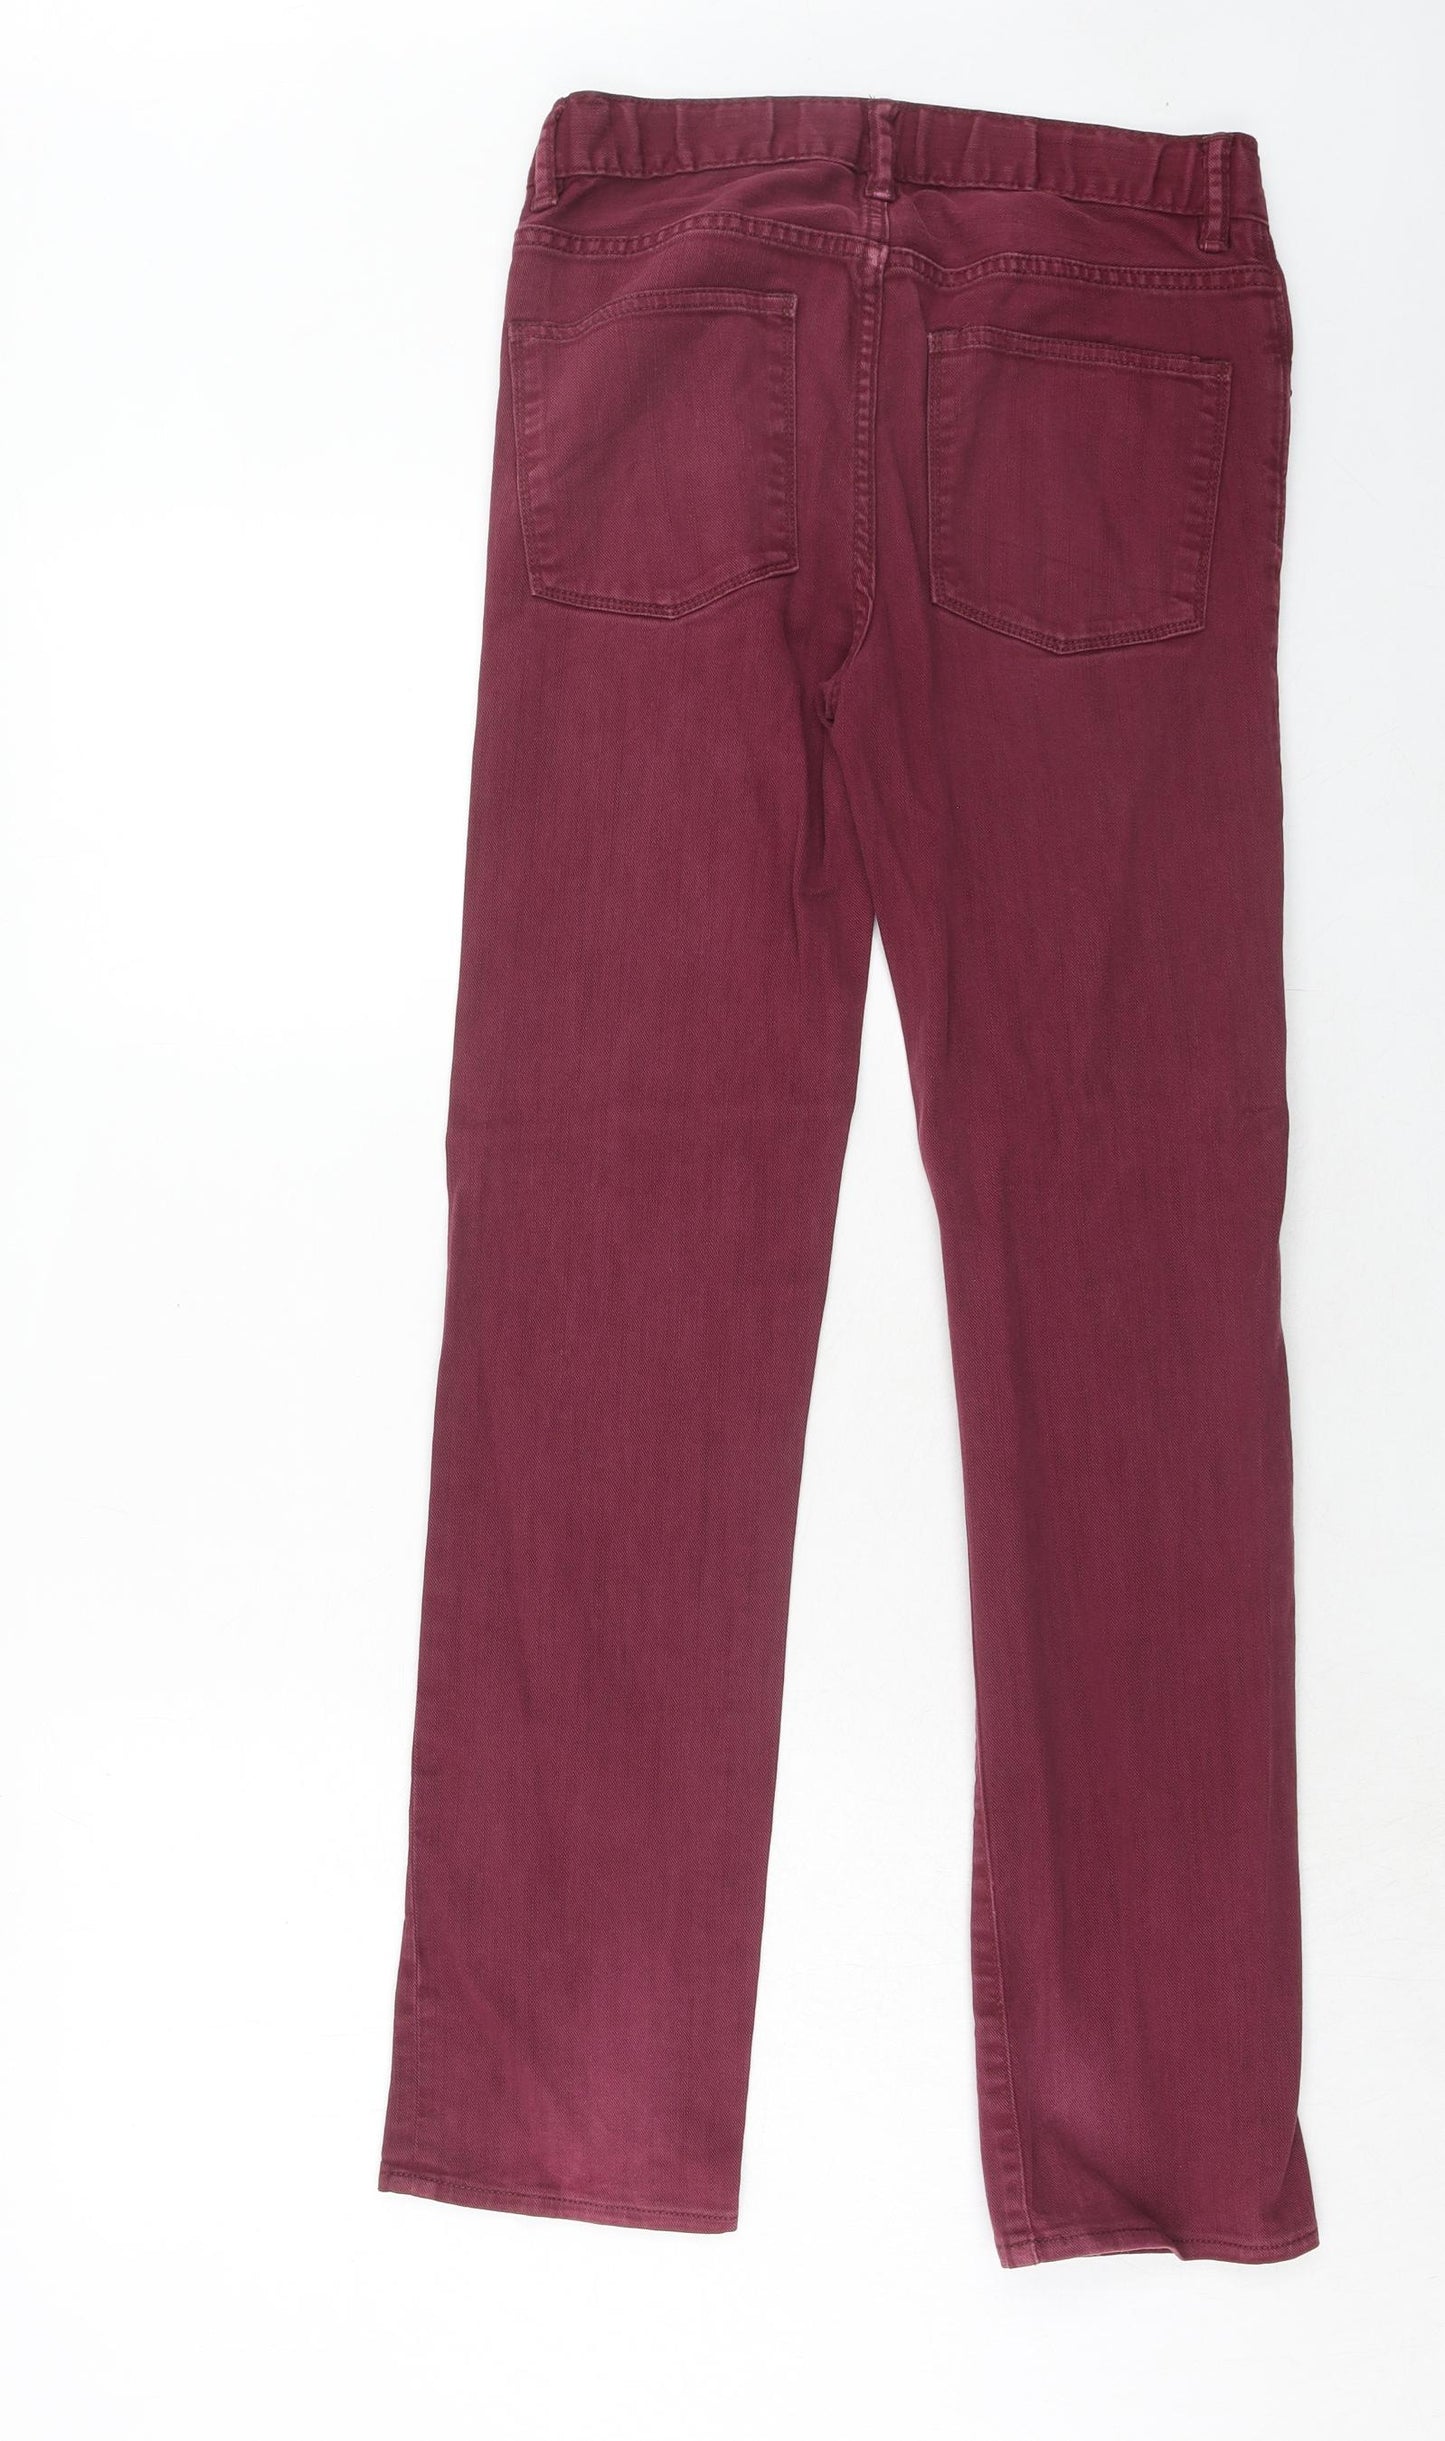 Gap Girls Purple Cotton Skinny Jeans Size 13 Years Regular Zip